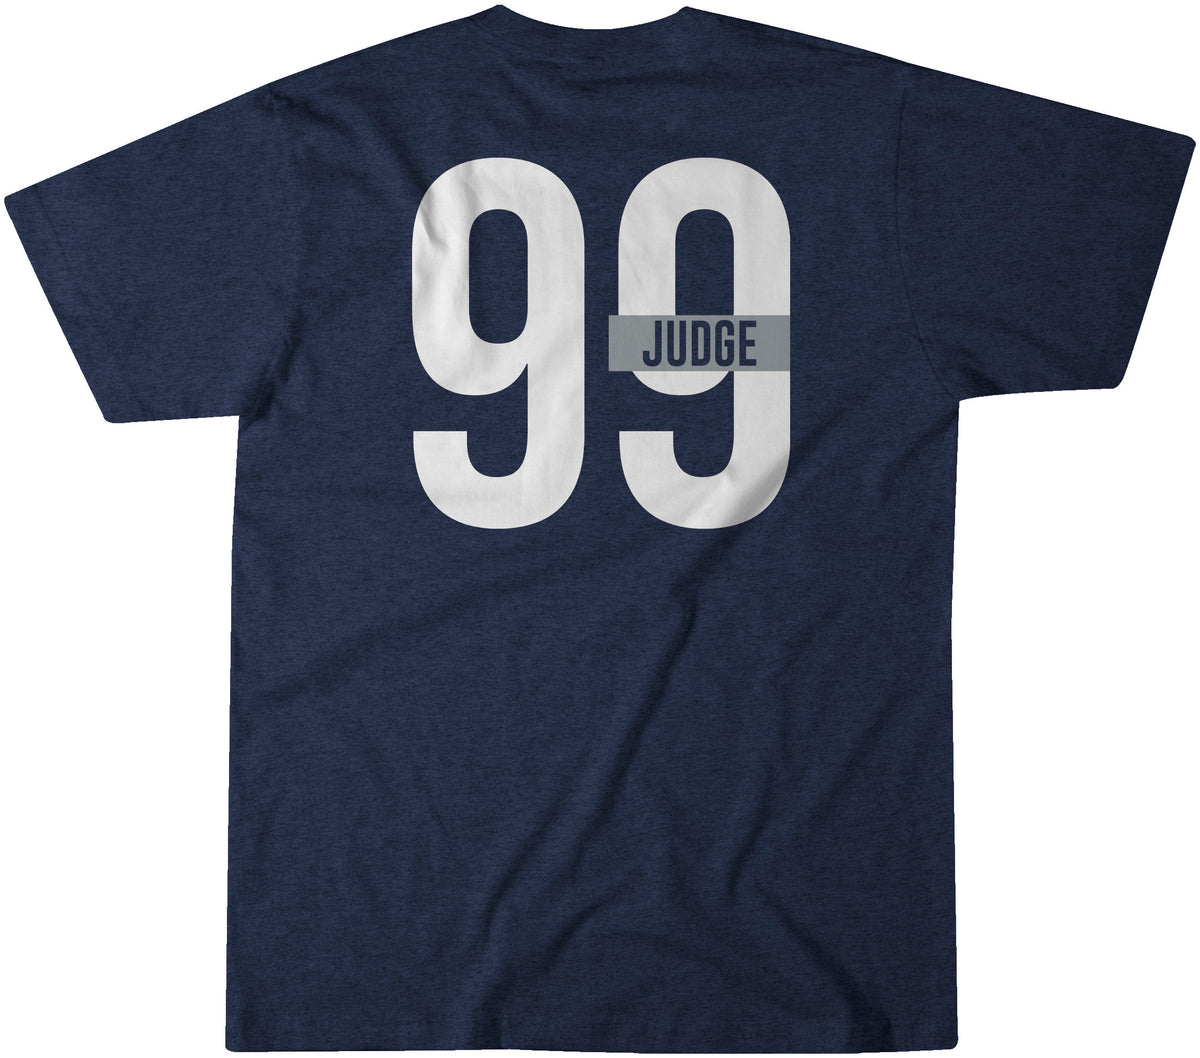 Aaron Judge All Rise Name + Number Shirt - MLBPA Licensed - BreakingT